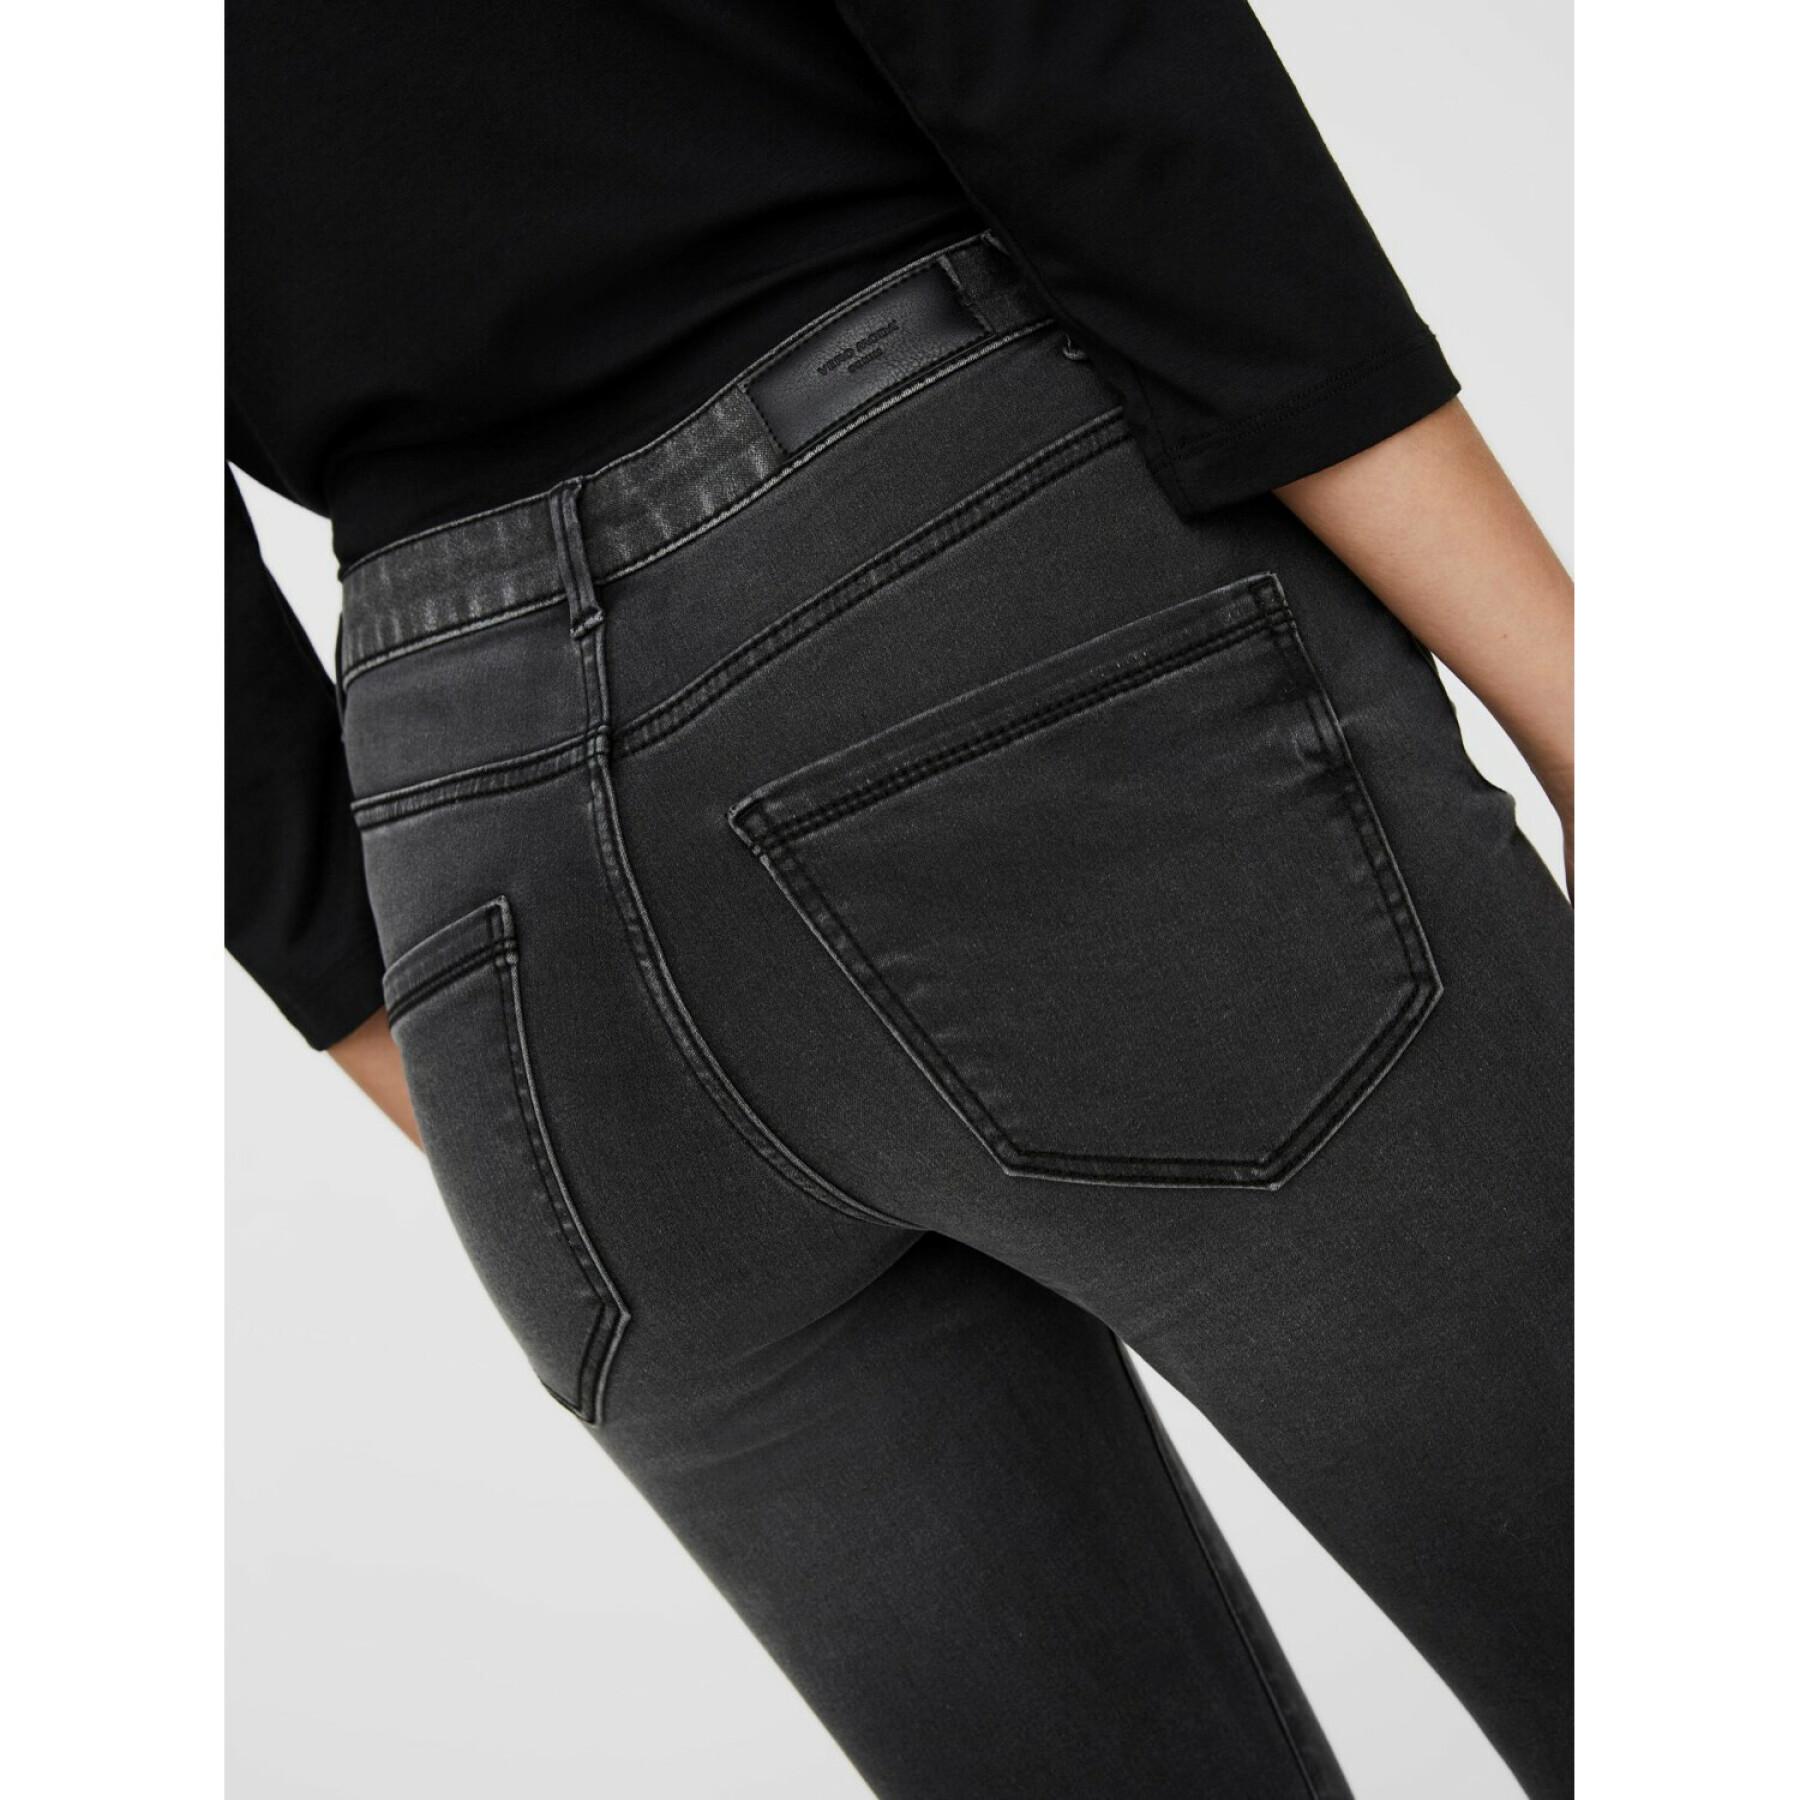 Skinny jeans för kvinnor Vero Moda vmsophia 224